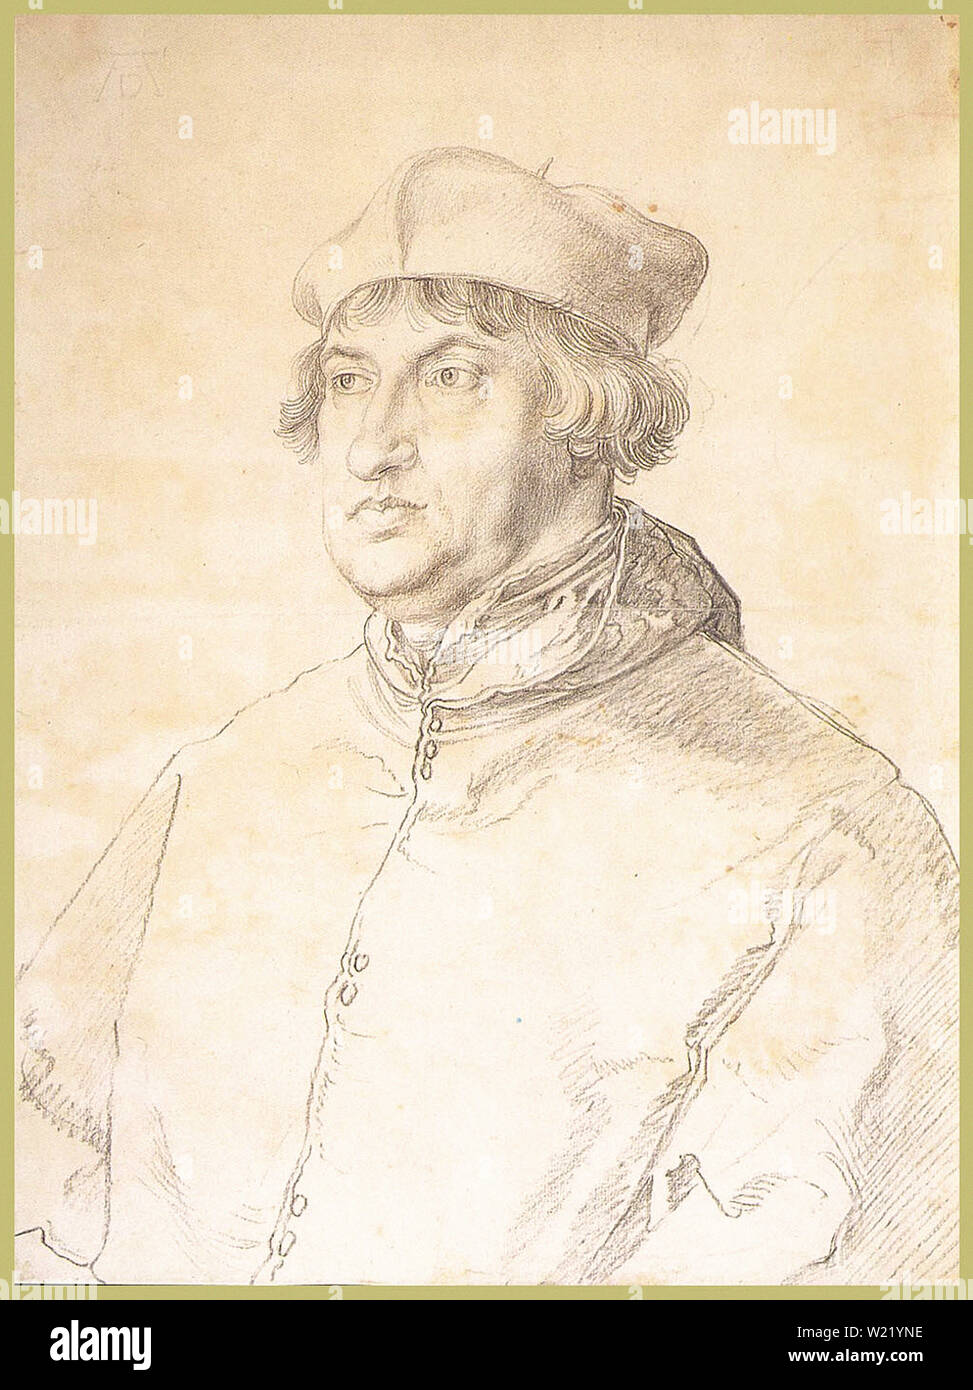 Albrecht Dürer - Cardinal Albrecht Von Brandenburg Stock Photo